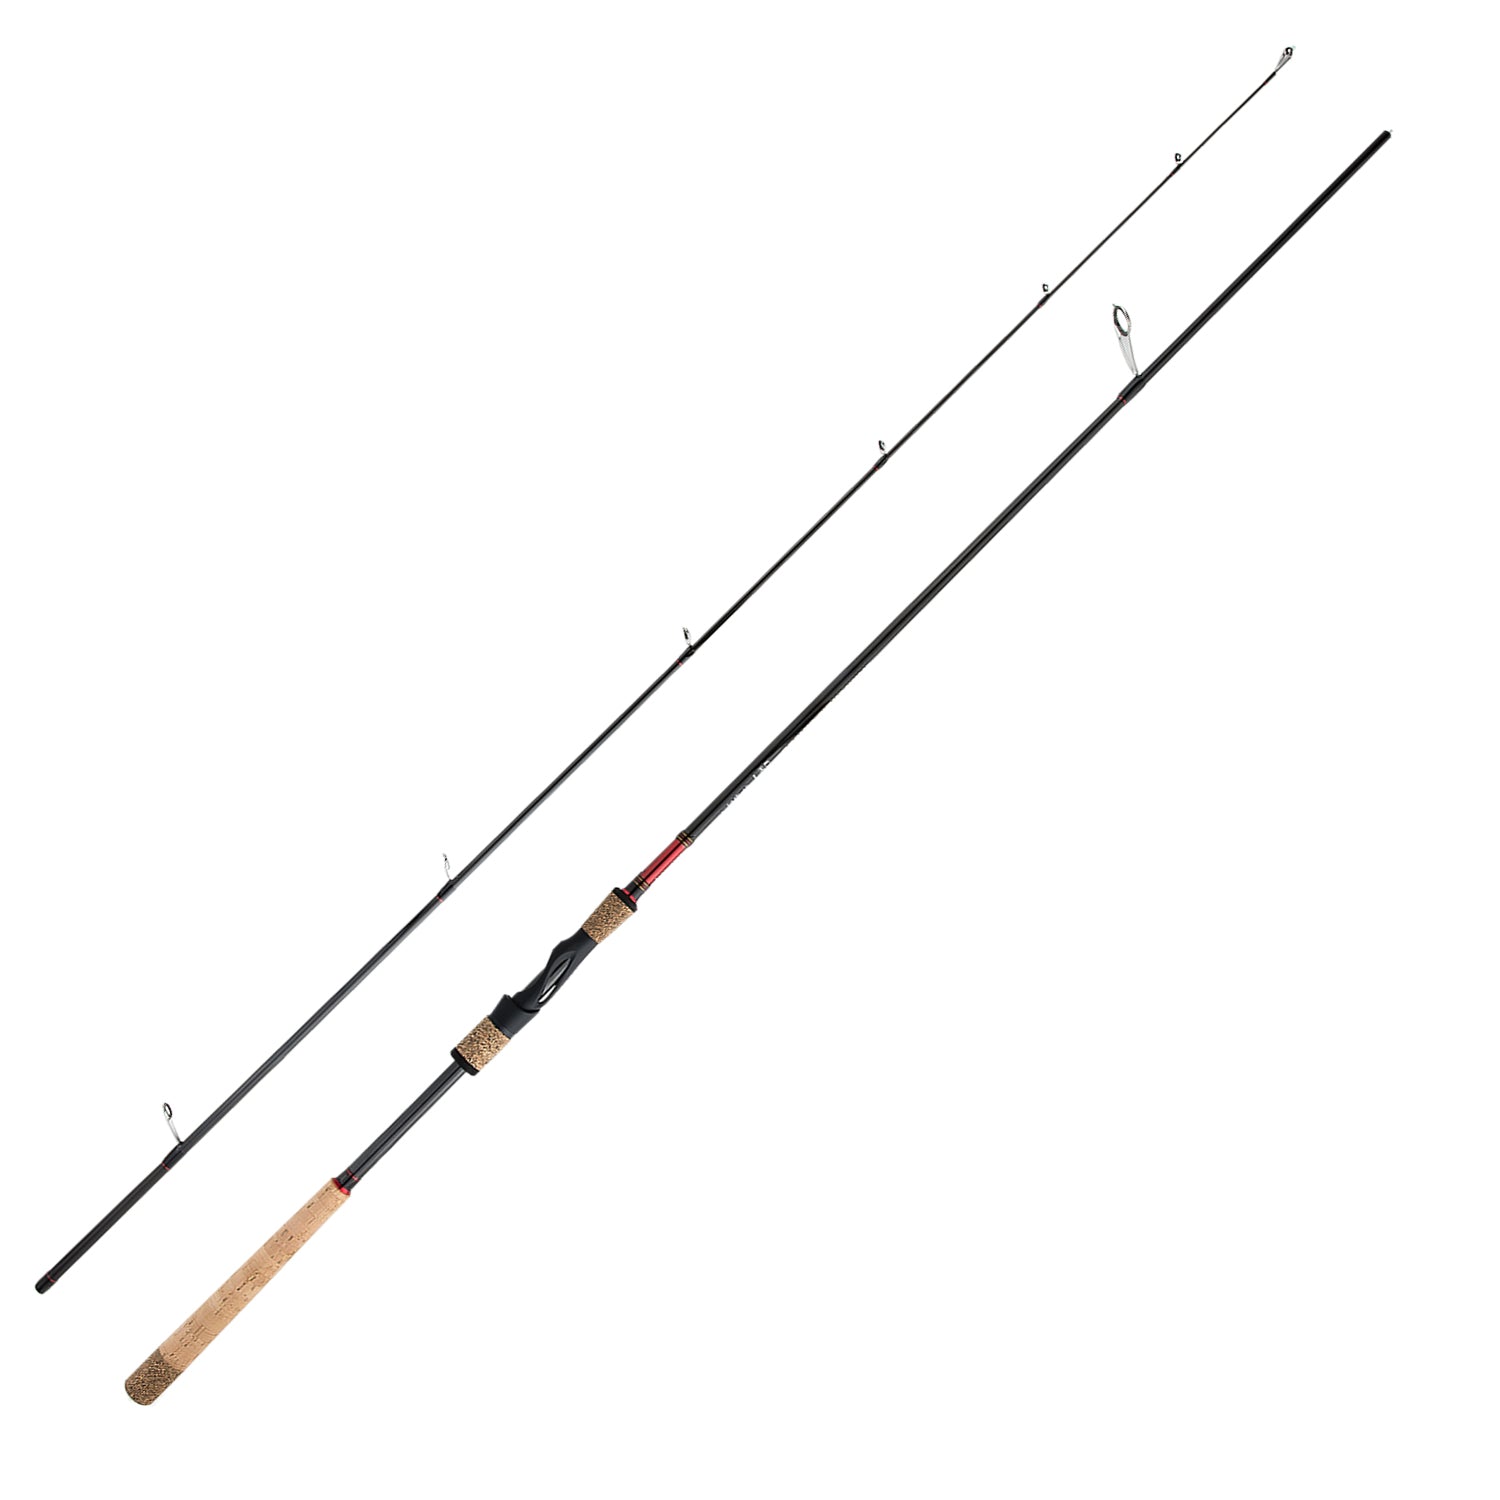 BERRYPRO Salmon & Steelhead Spinning Rod IM8 Carbon Walleye Fishing Ro –  berrypro fishing